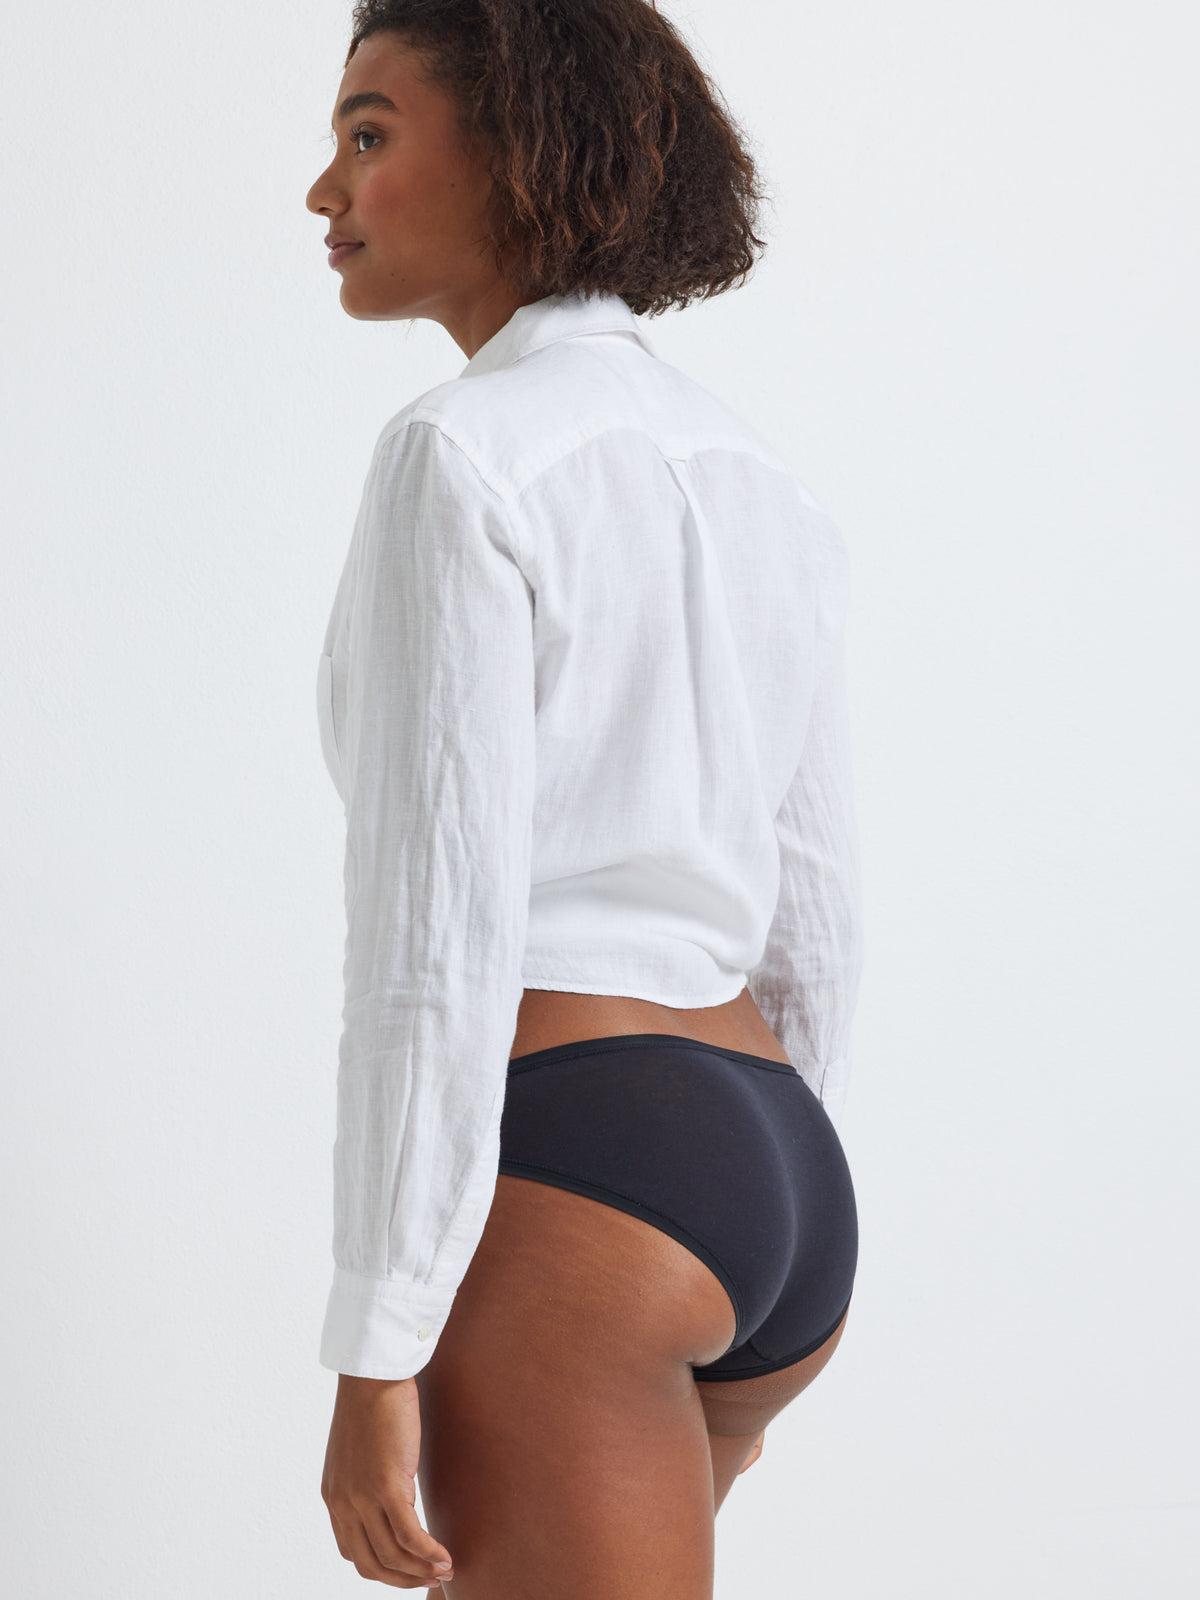 Pure Cotton Black Bikini Underwear by Kayser Lingerie